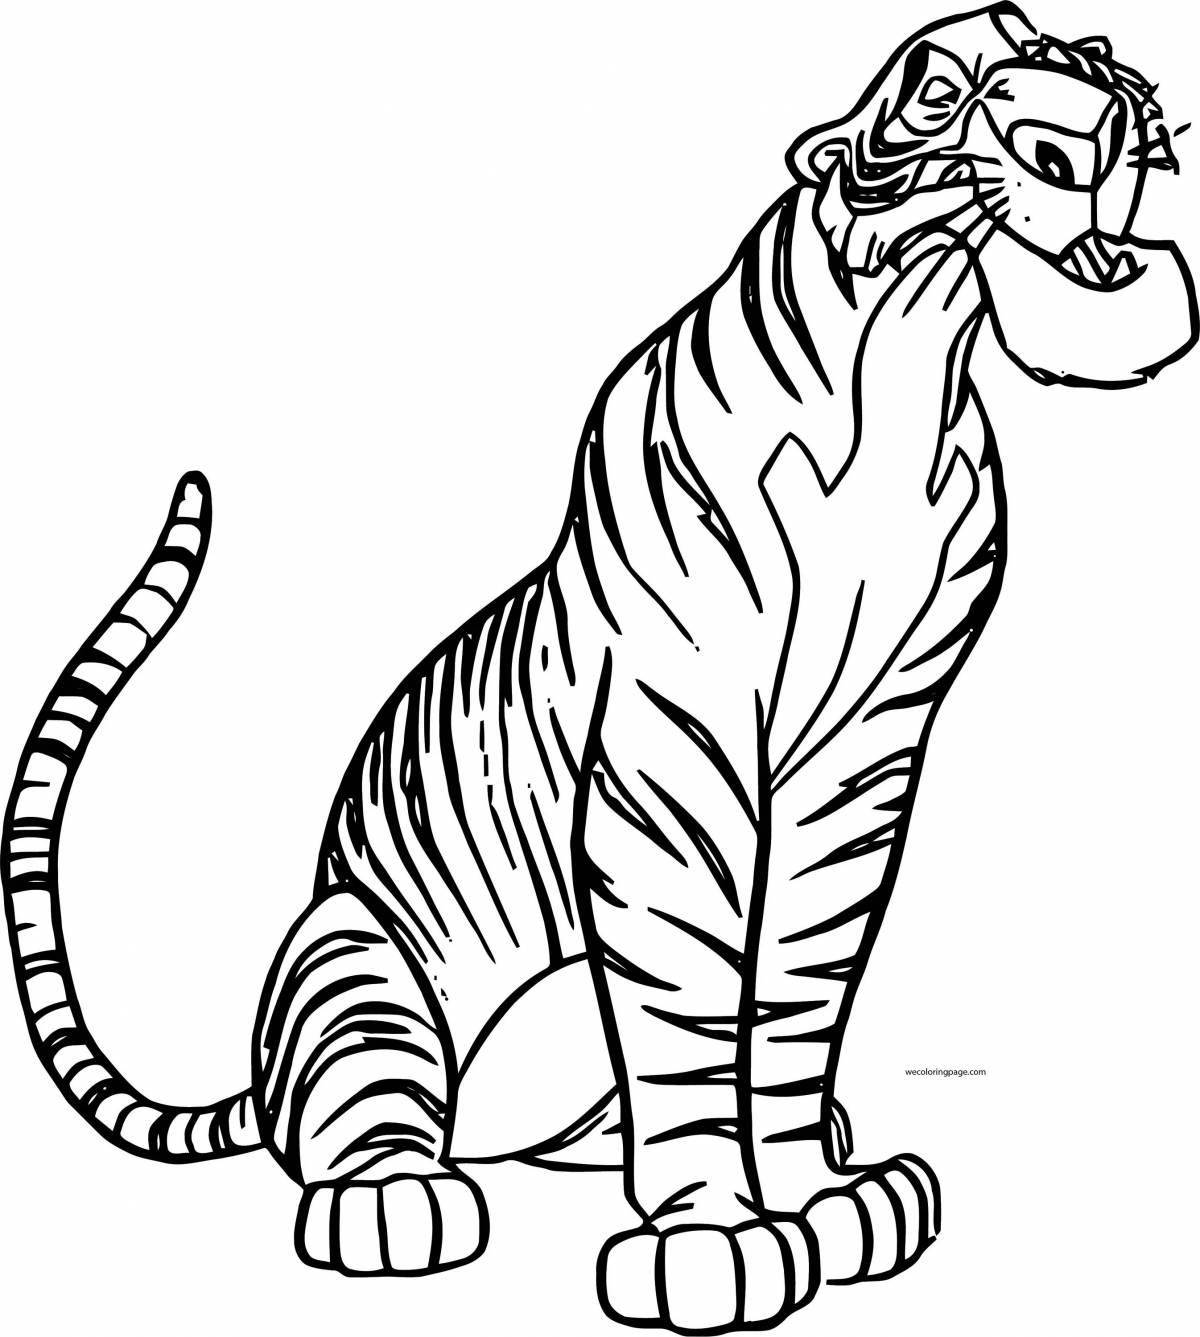 Impressive colored tiger sherkhan coloring book